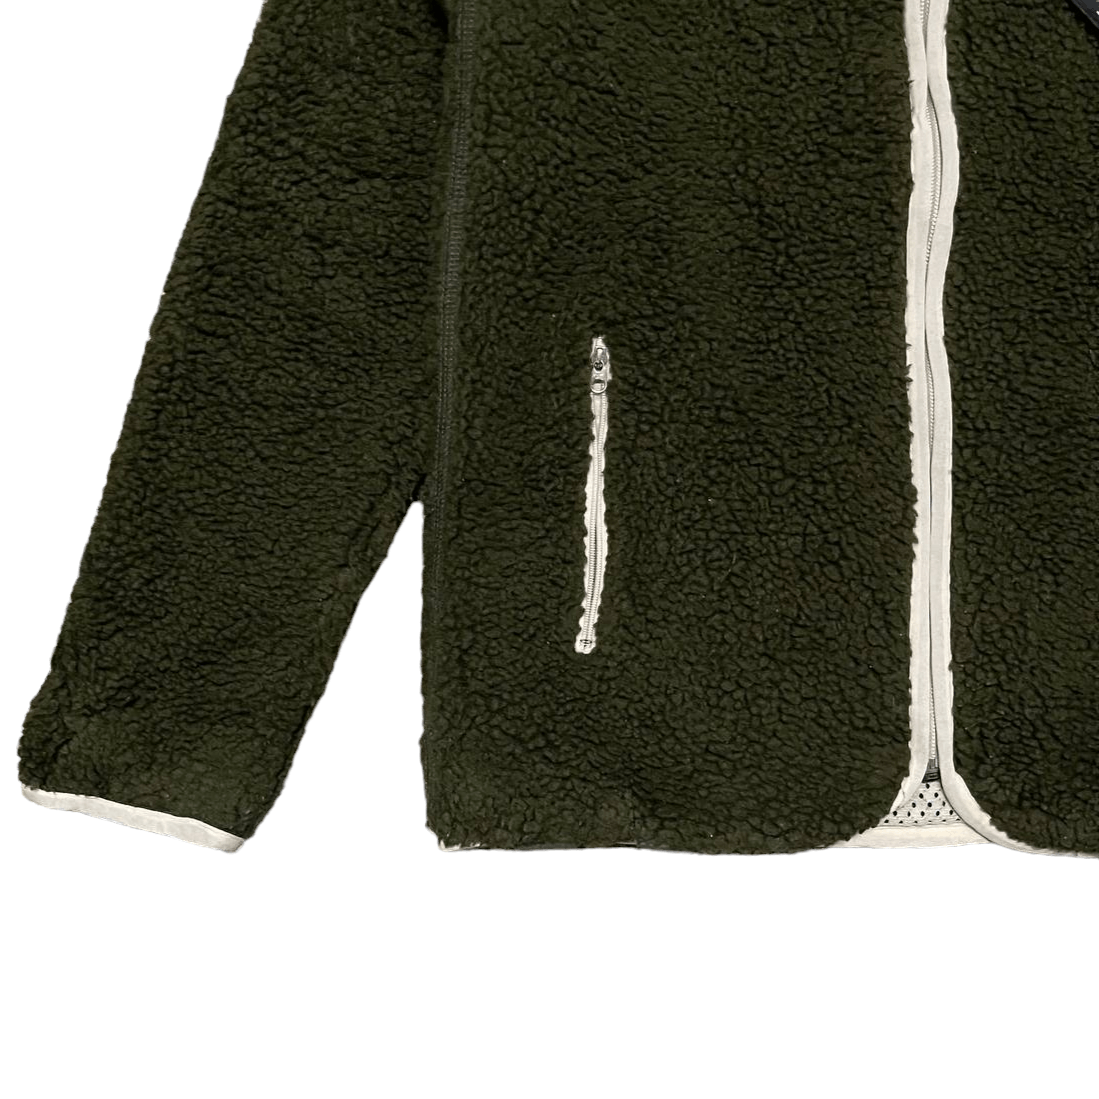 A/T Atsuro Tayama Pile Poil Fleece Jacket - 3